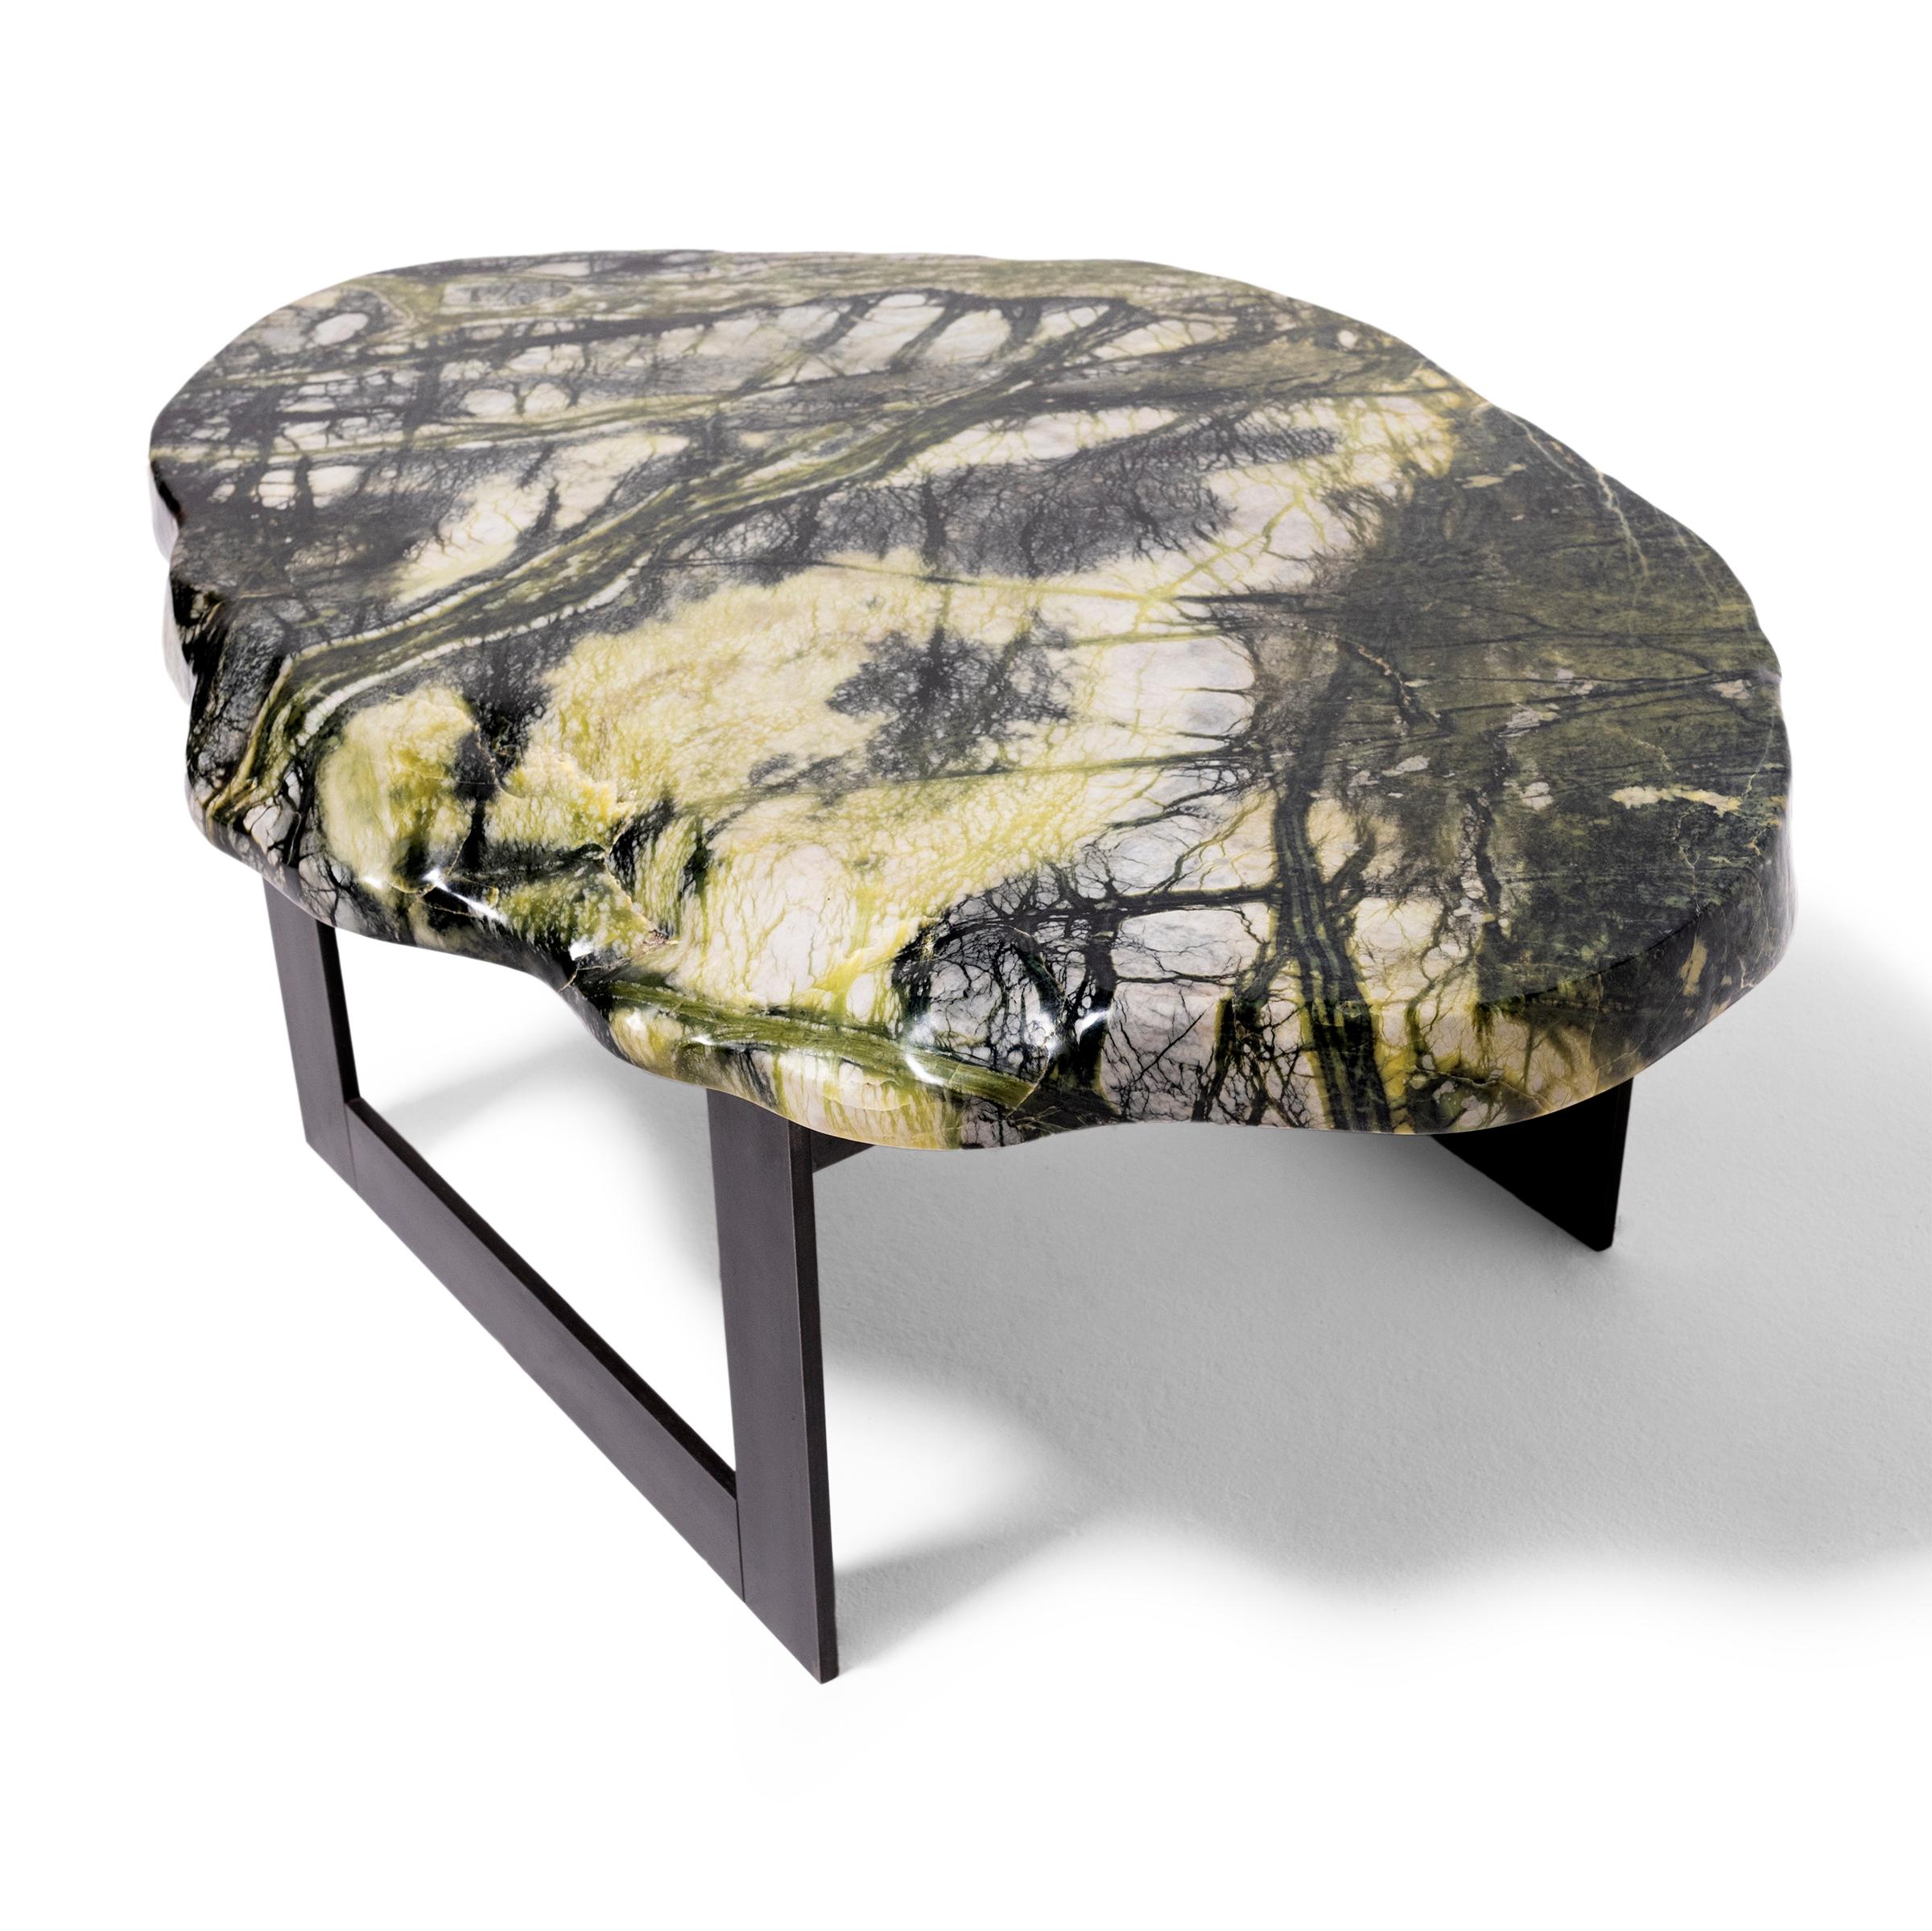 Organic Modern Low Greenery Meditation Stone Table